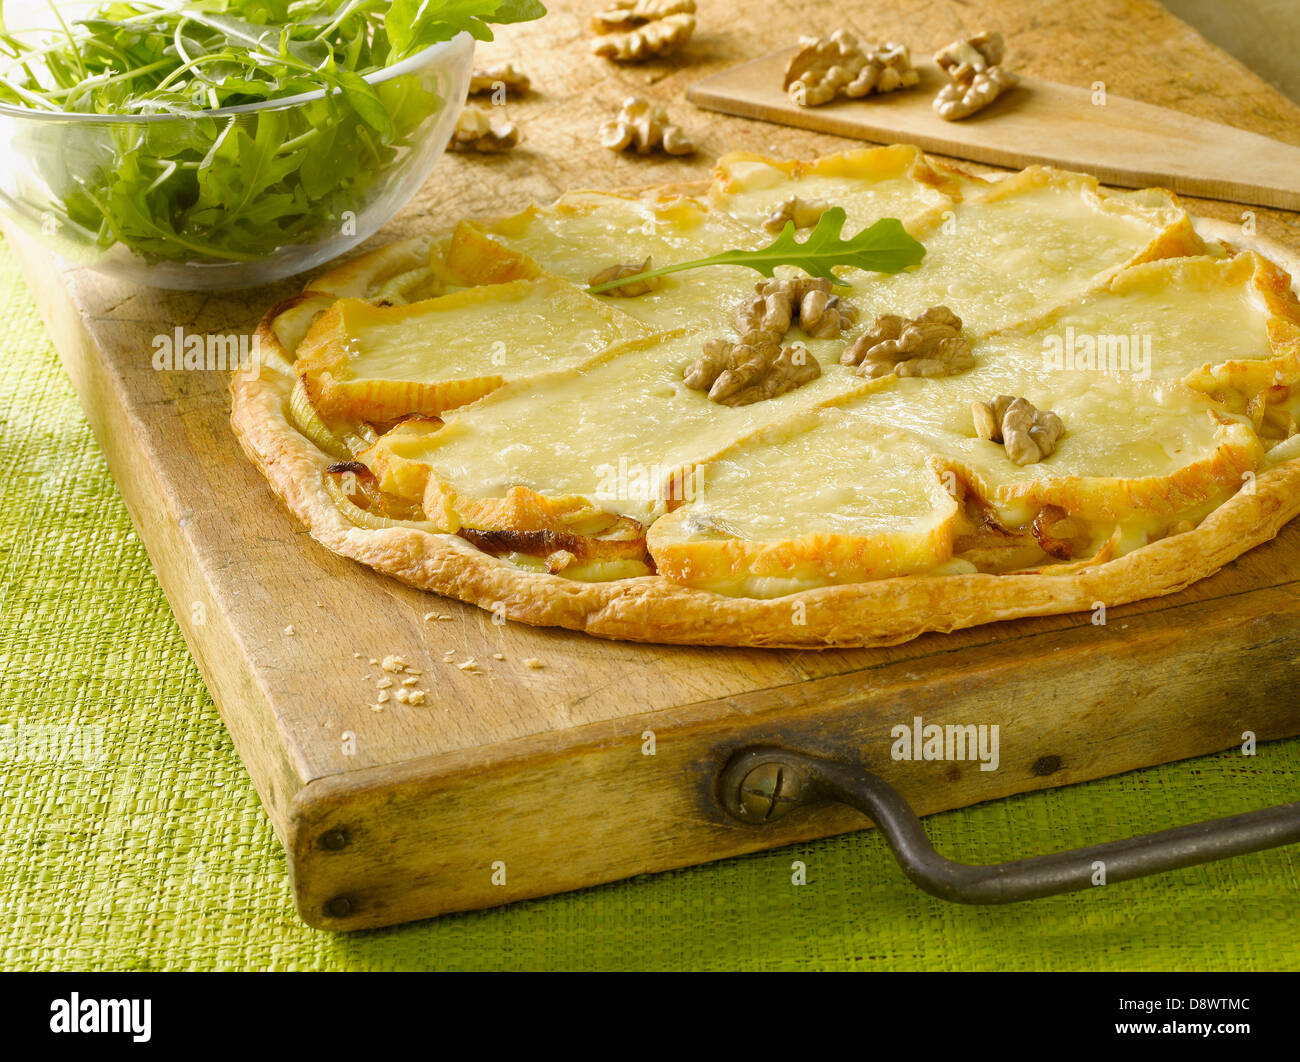 Maroilles,onion and walnut tart Stock Photo